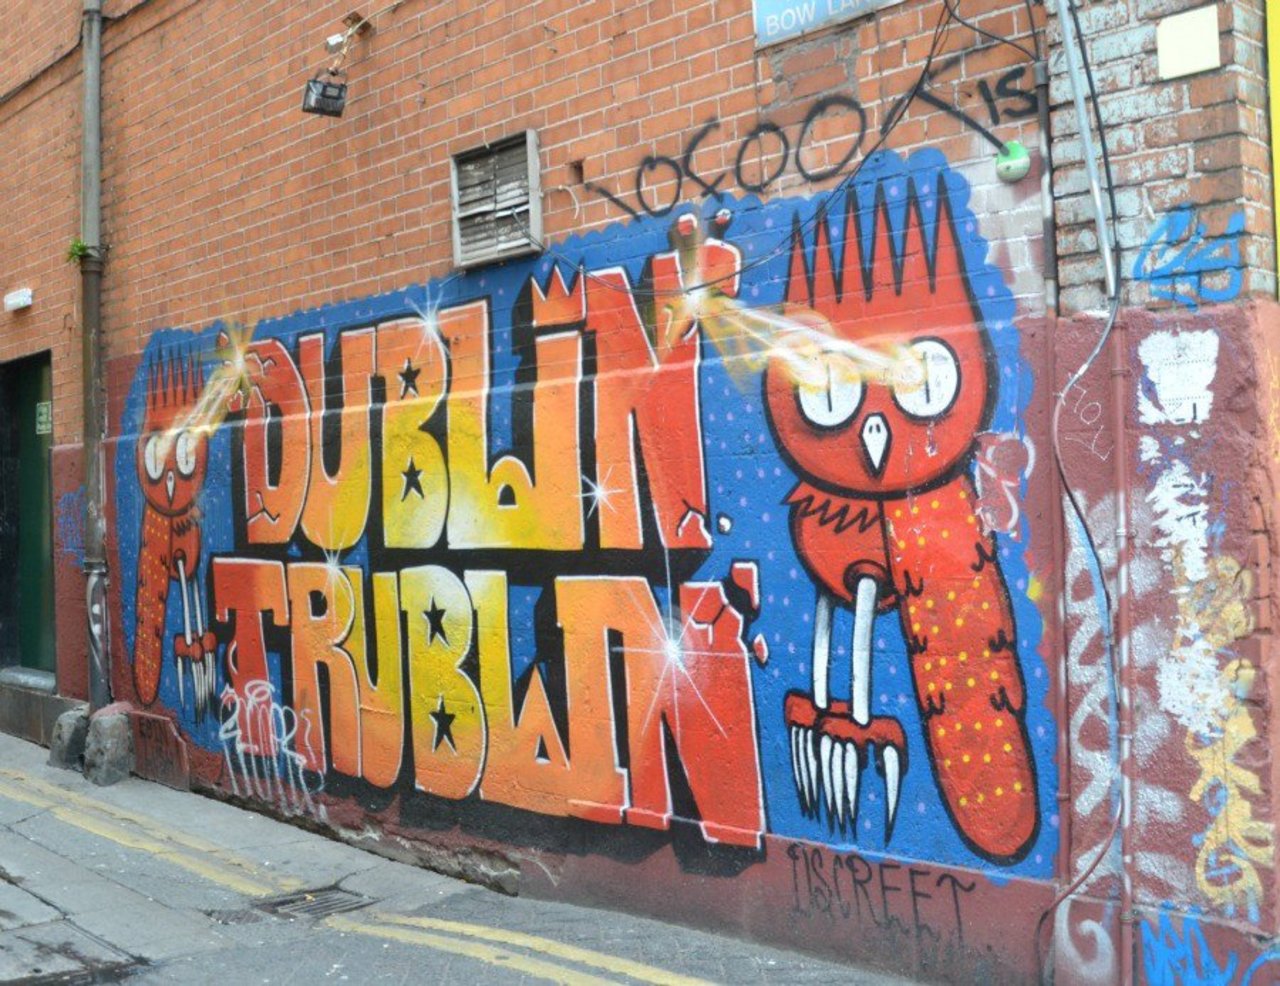 My view of #Dublin - colourful #graffiti sign spotted downtown #streetart https://waheedaharris.wordpress.com/2015/10/26/ahh-dublin https://t.co/gAi5vW7gio